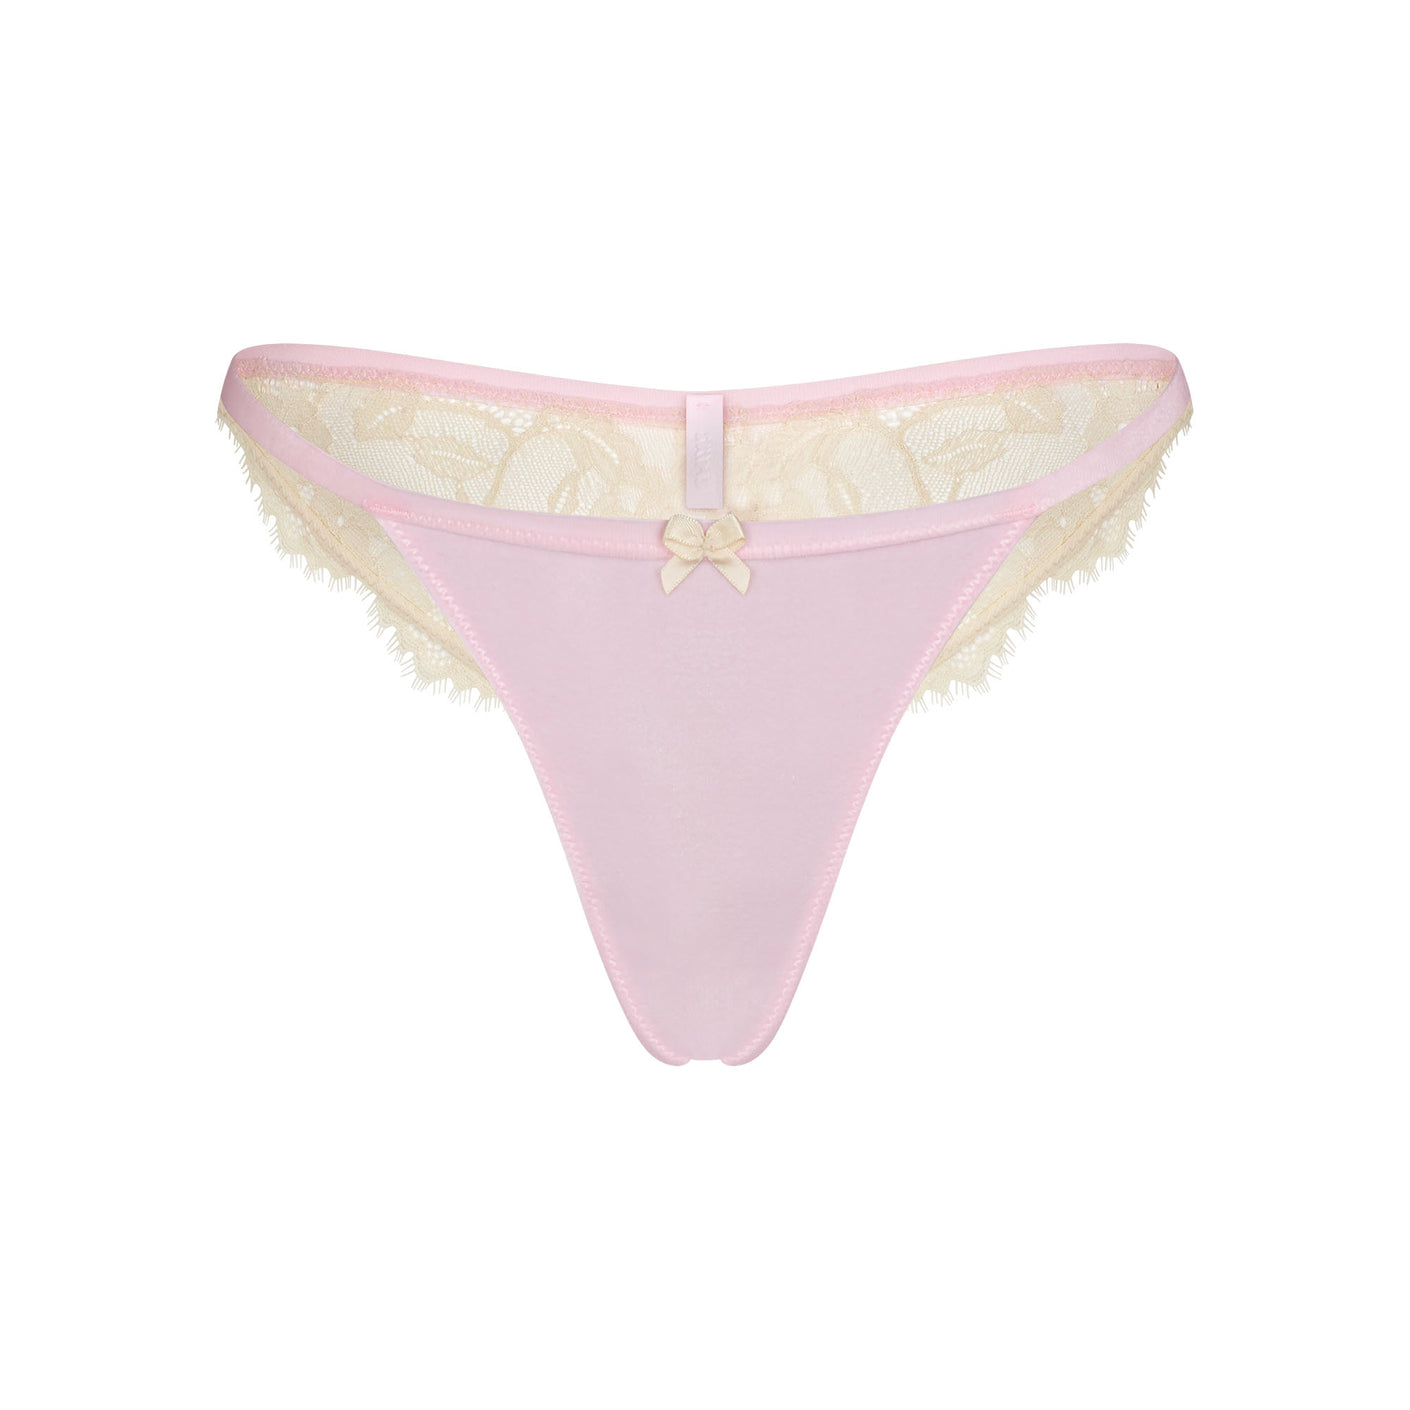 Belvia Belvia Shapewear SlimSwim Swimsuit (8-10, Cherry) S Pink Small